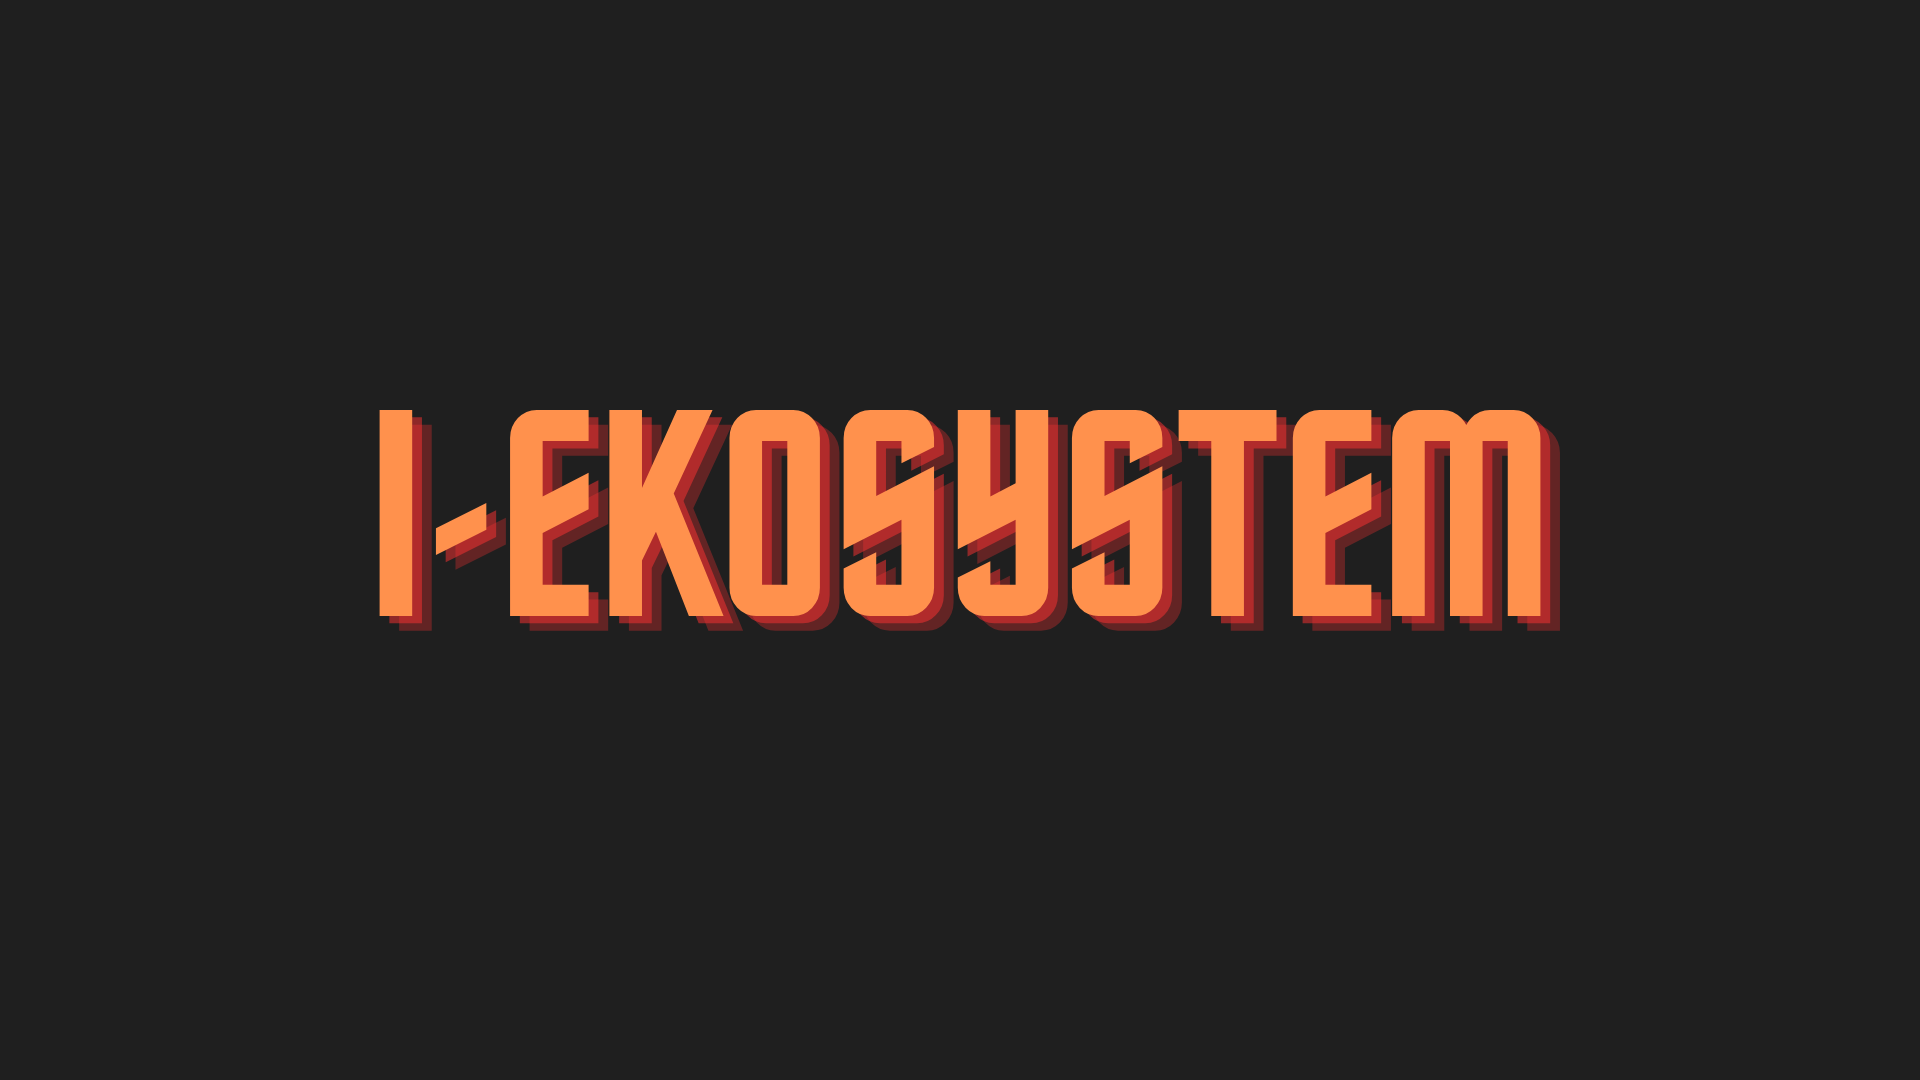 I-Ekosystem